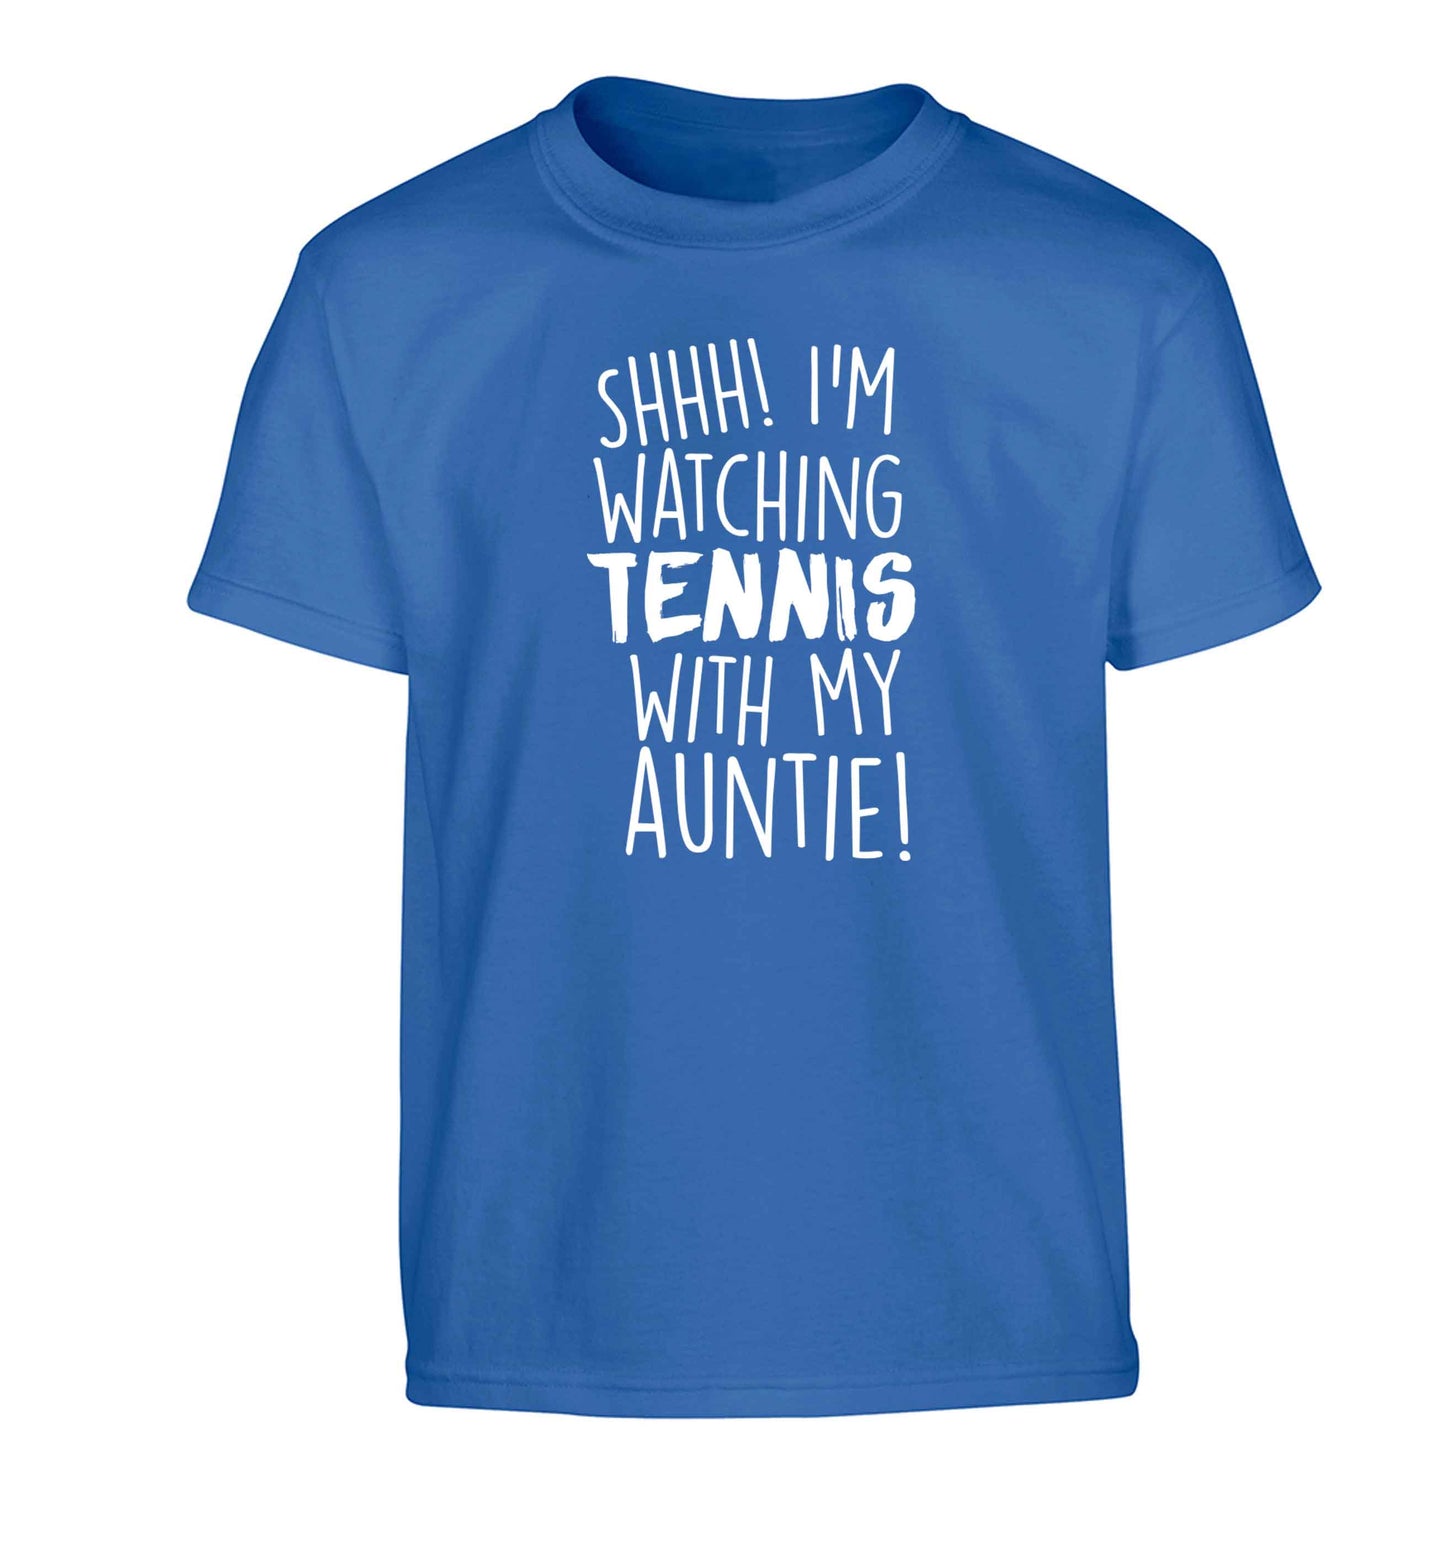 Shh! I'm watching tennis with my auntie! Children's blue Tshirt 12-13 Years